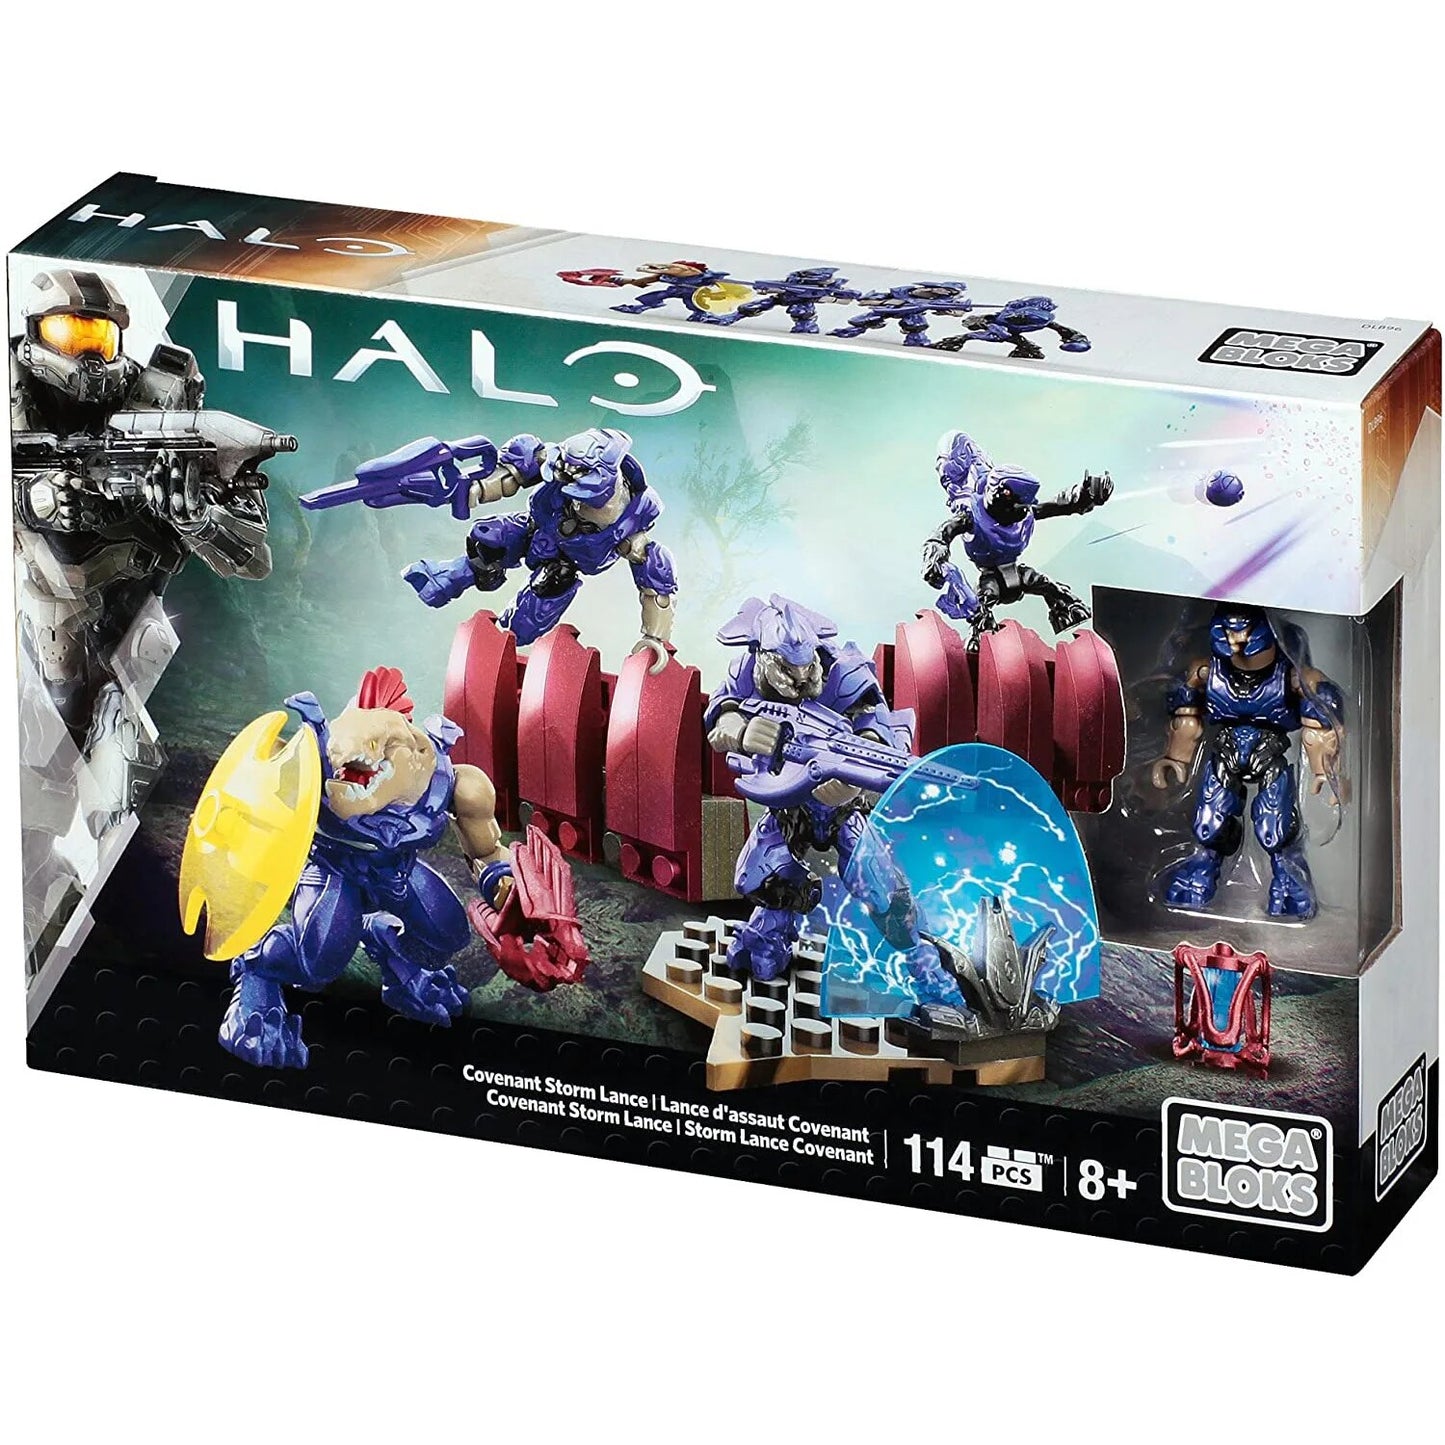 114Pcs Halo Model Building Blocks